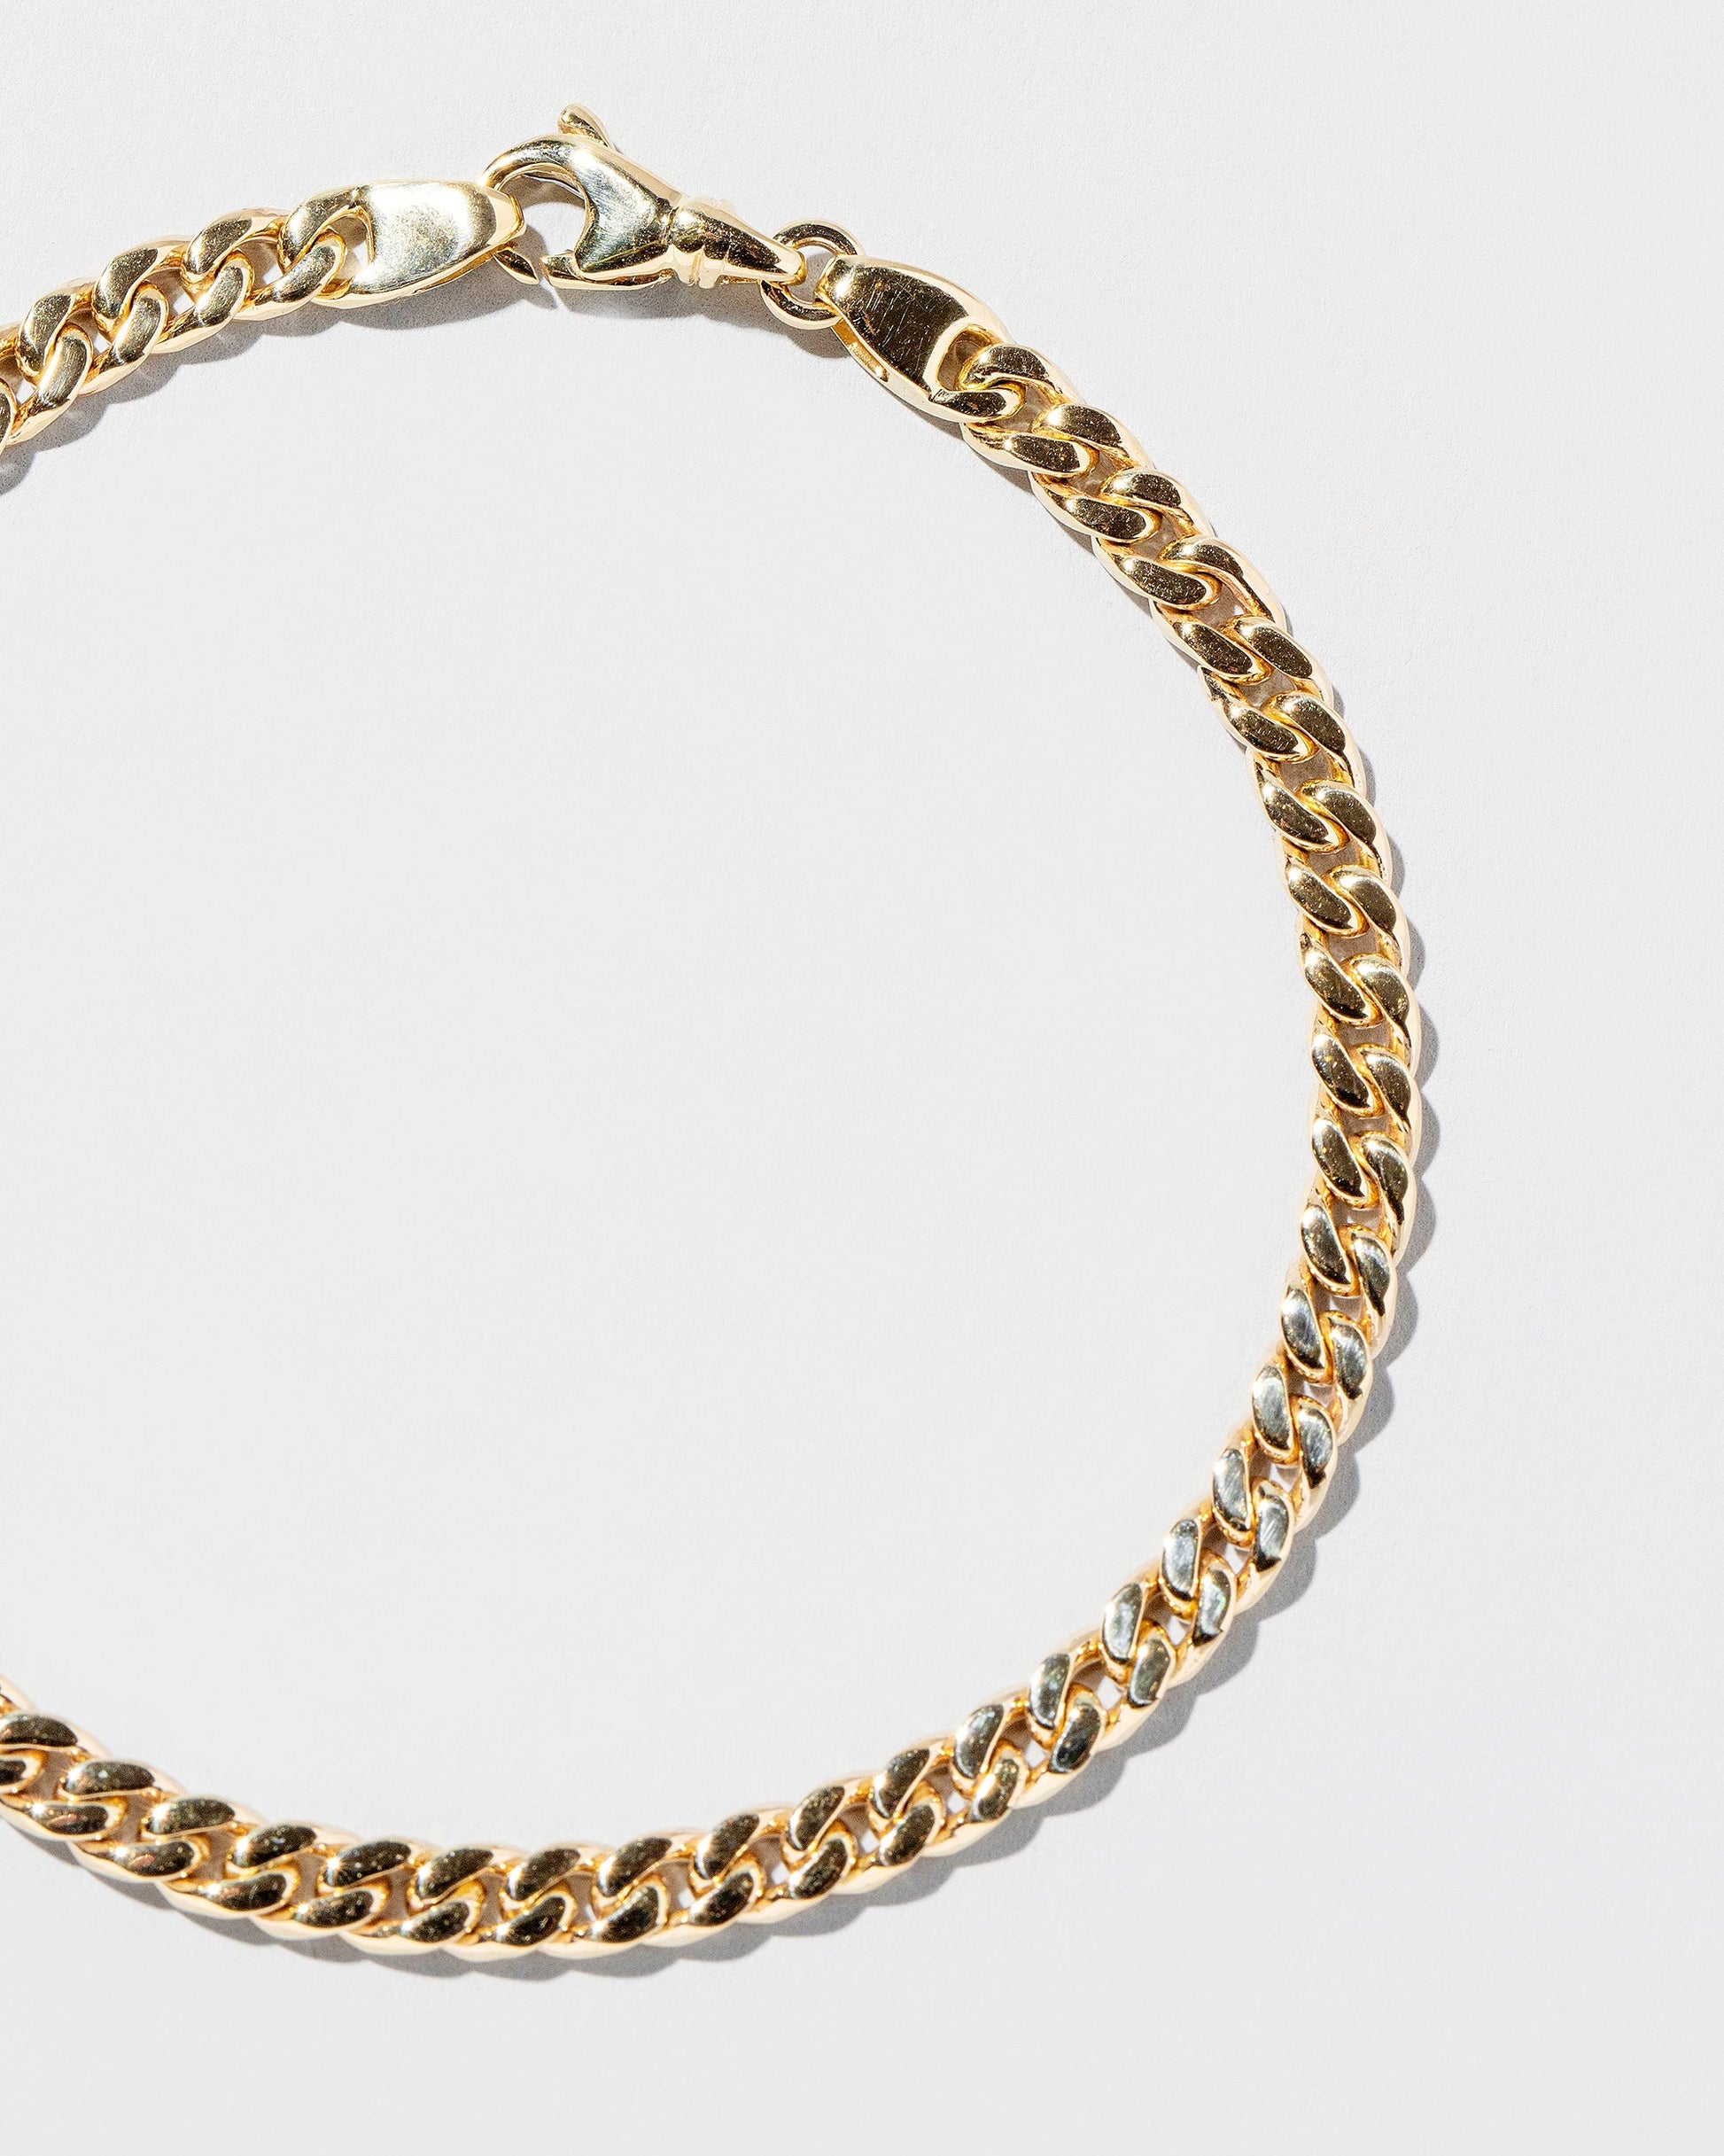  Curb Chain Bracelet on light color background.